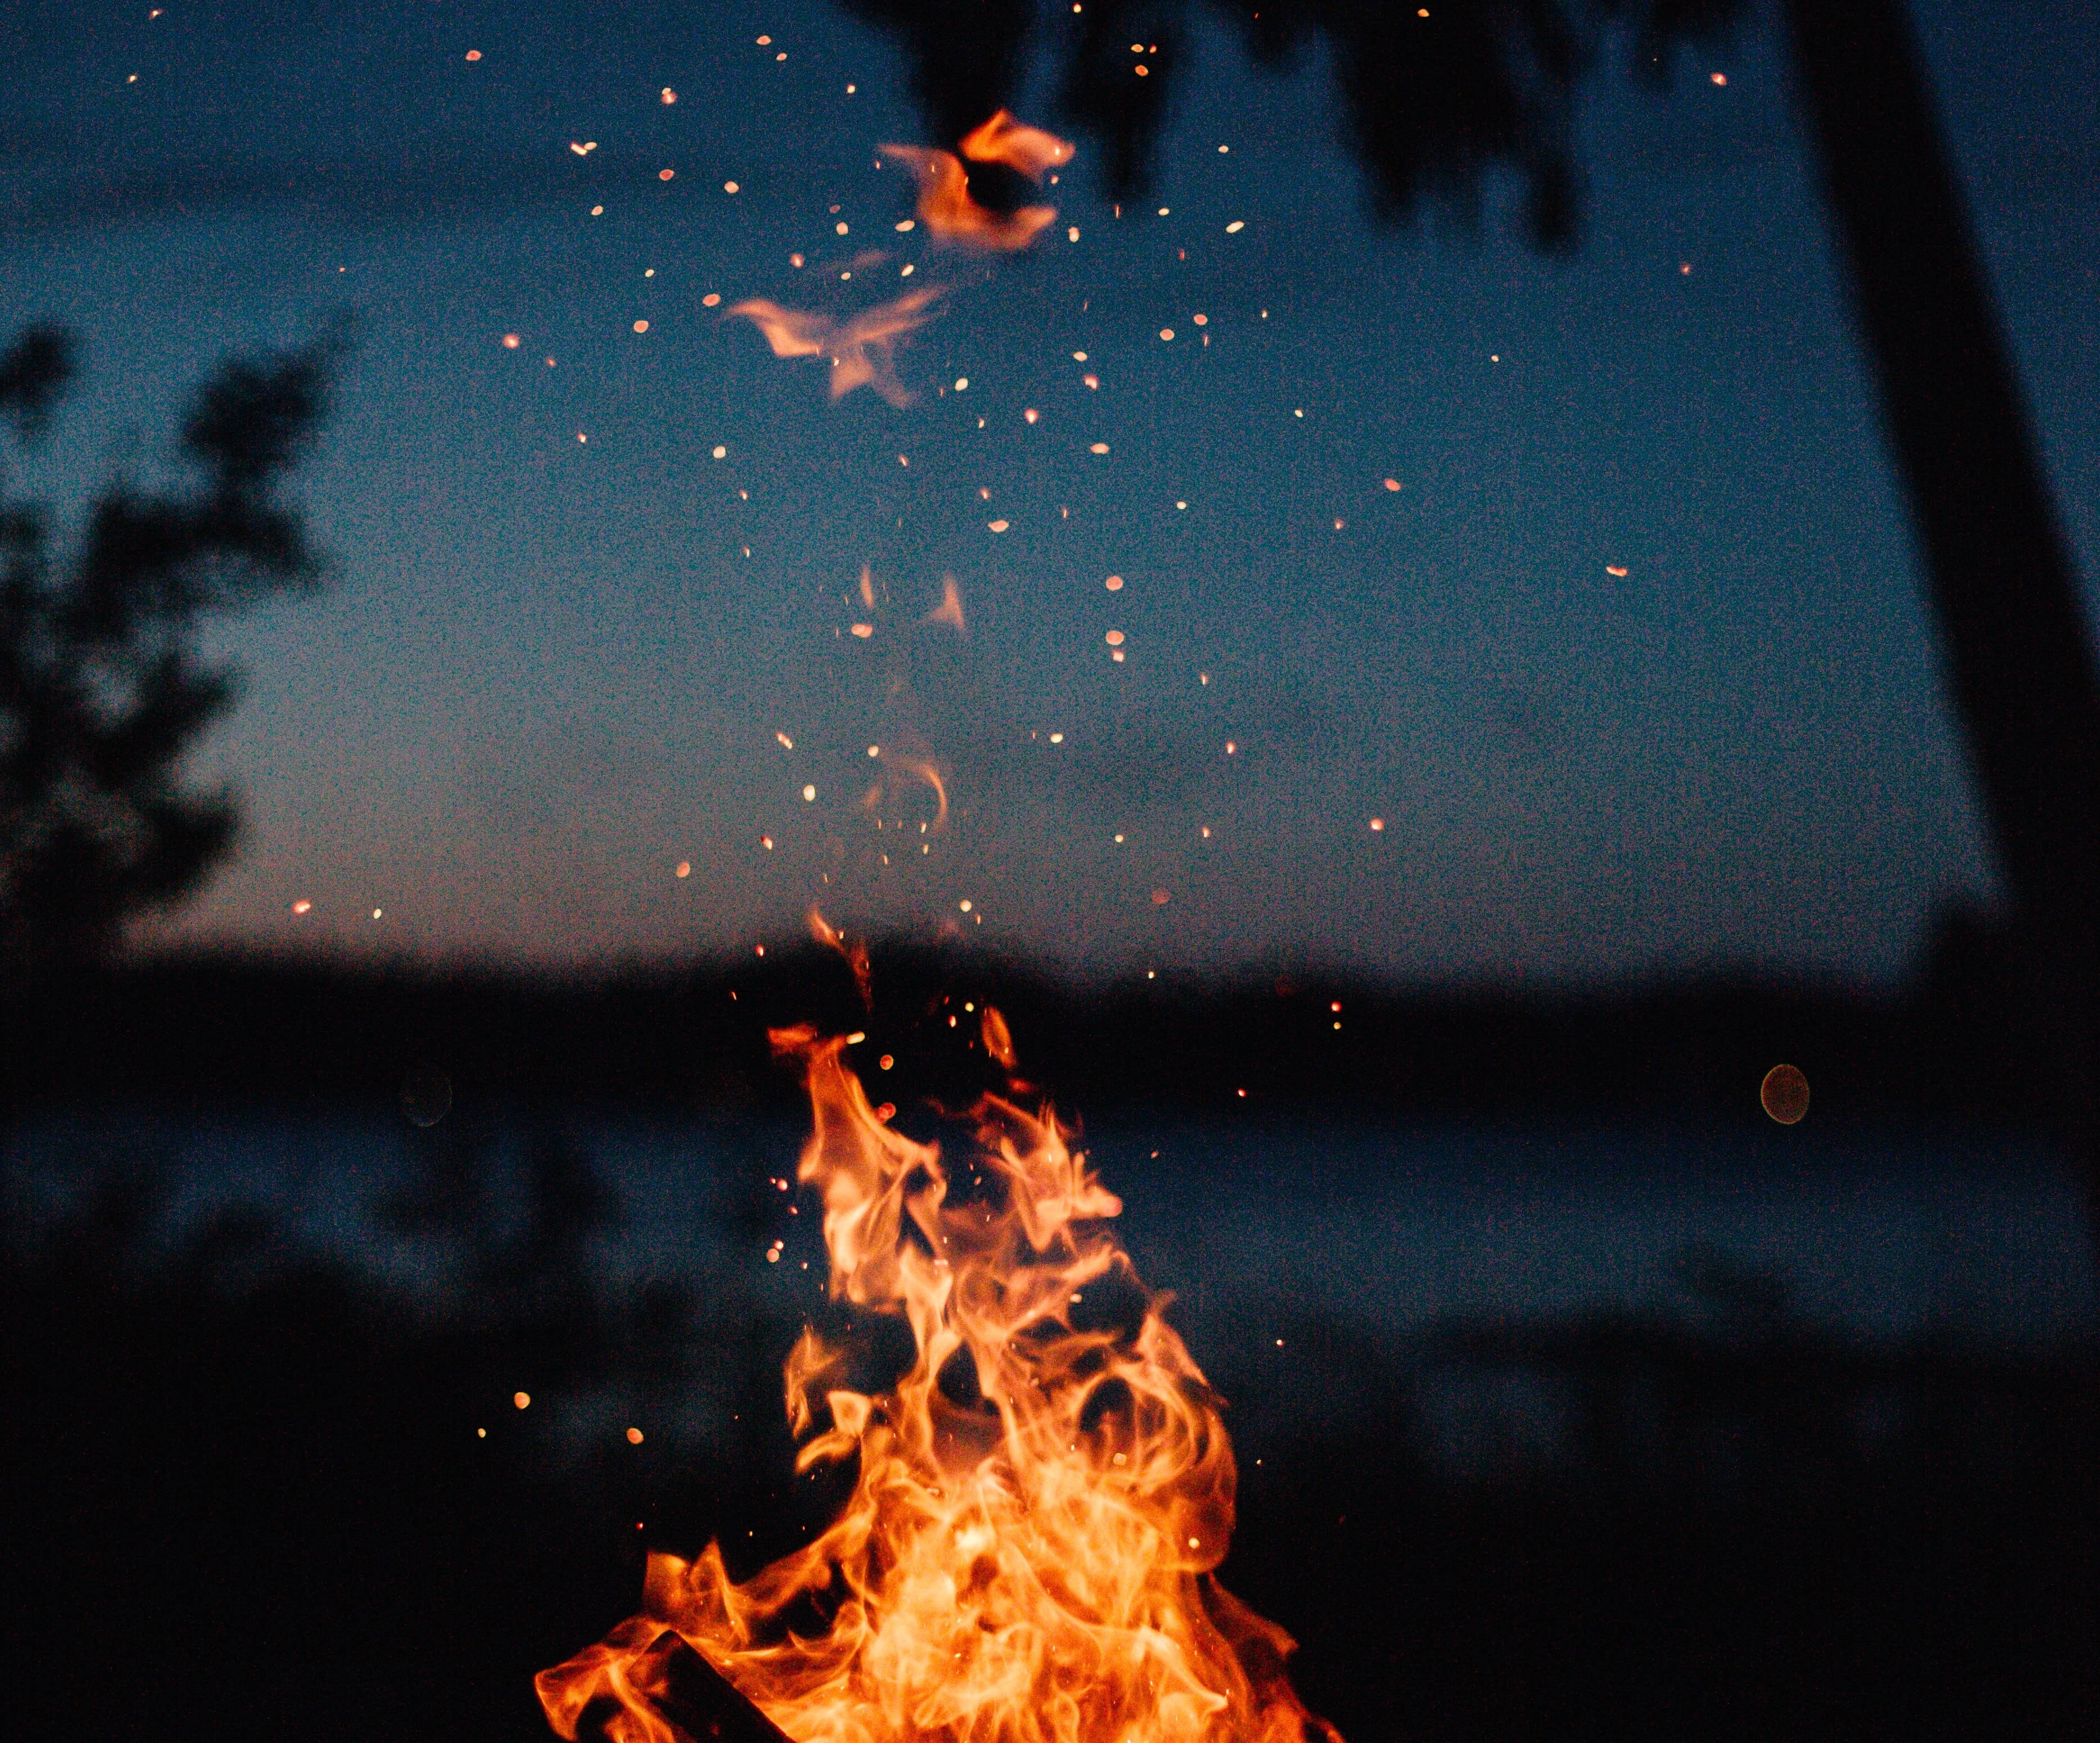 fire sparks against dark water/sky background